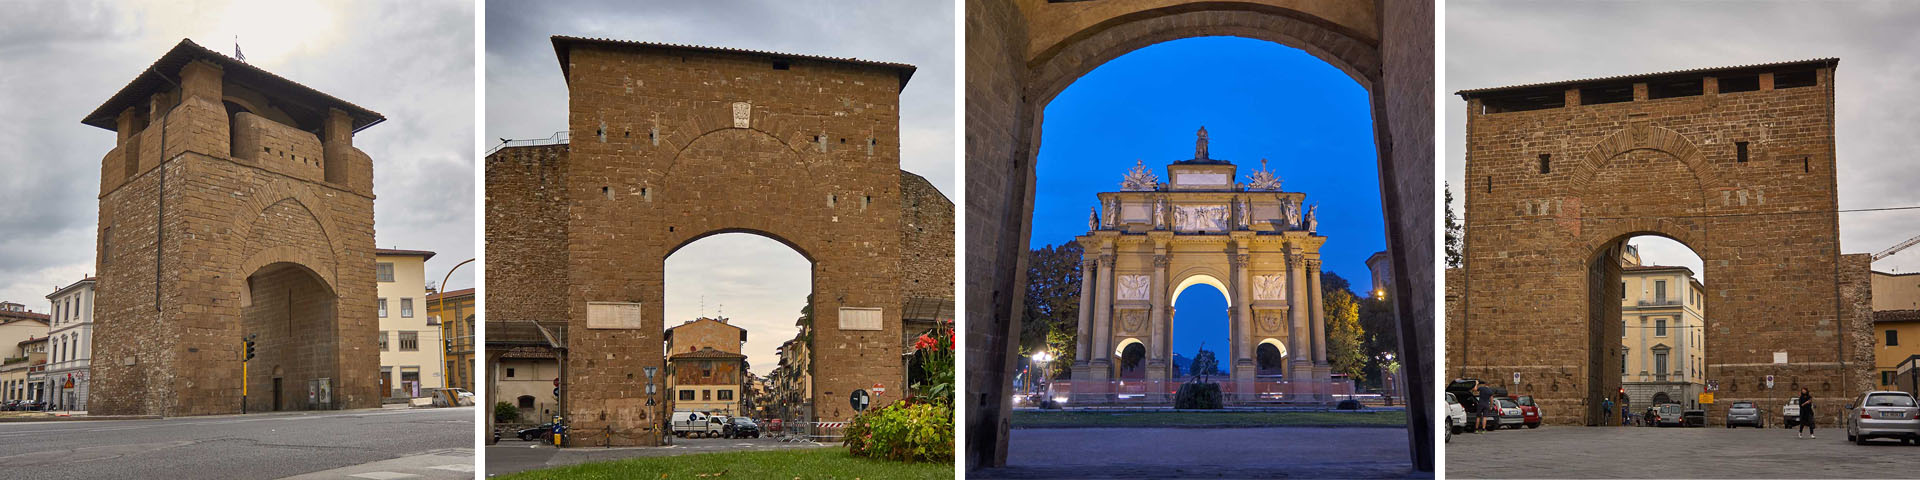 The Florentine Gates